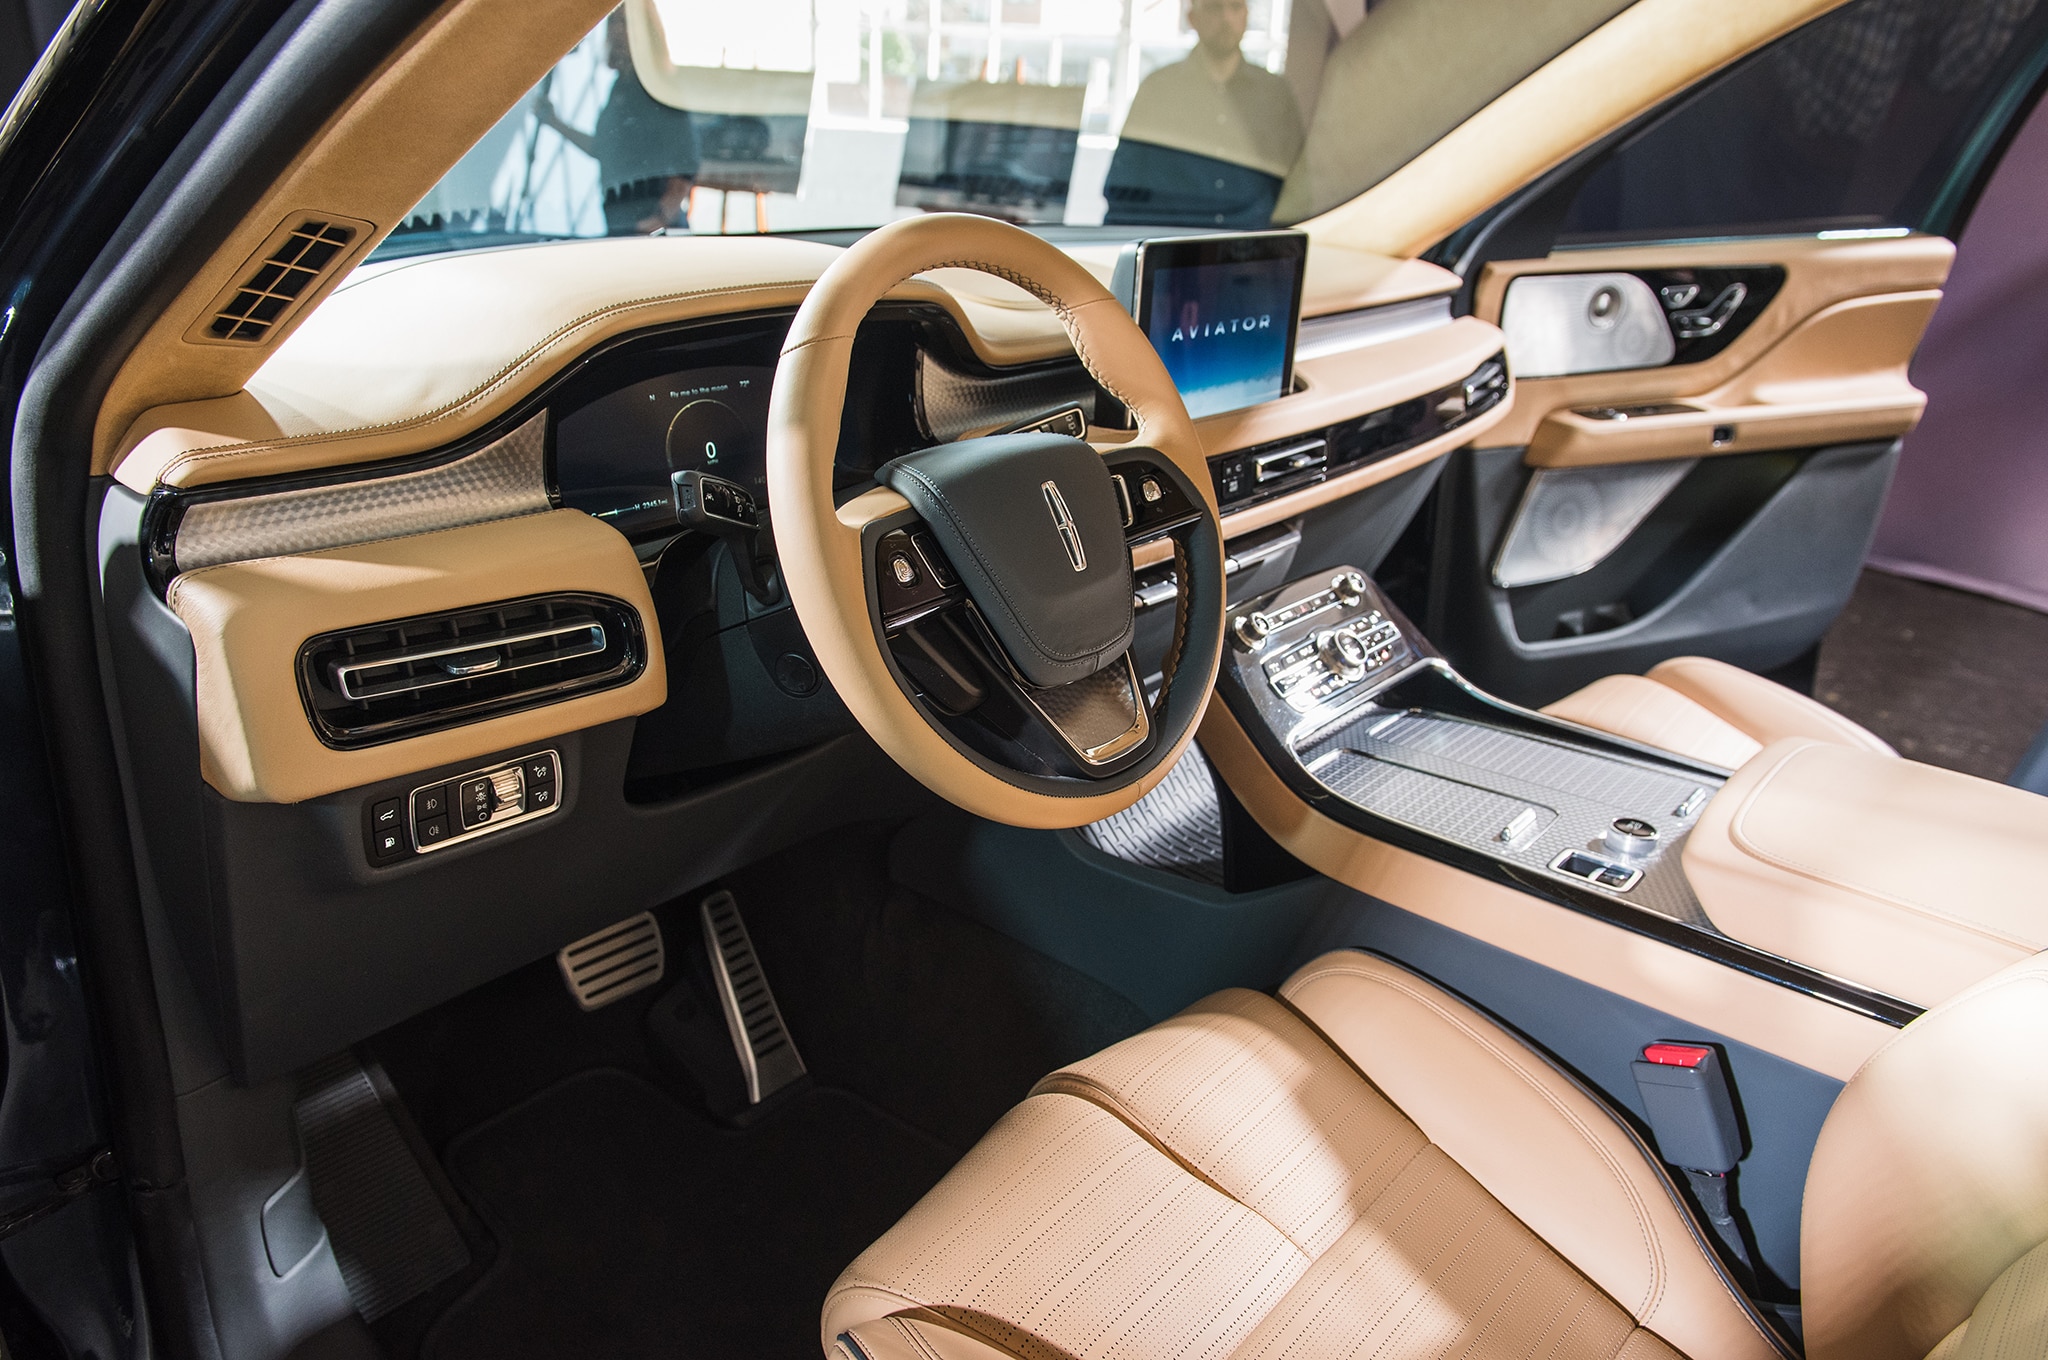 2018-Lincoln-Aviator-front-interior-03.jpg